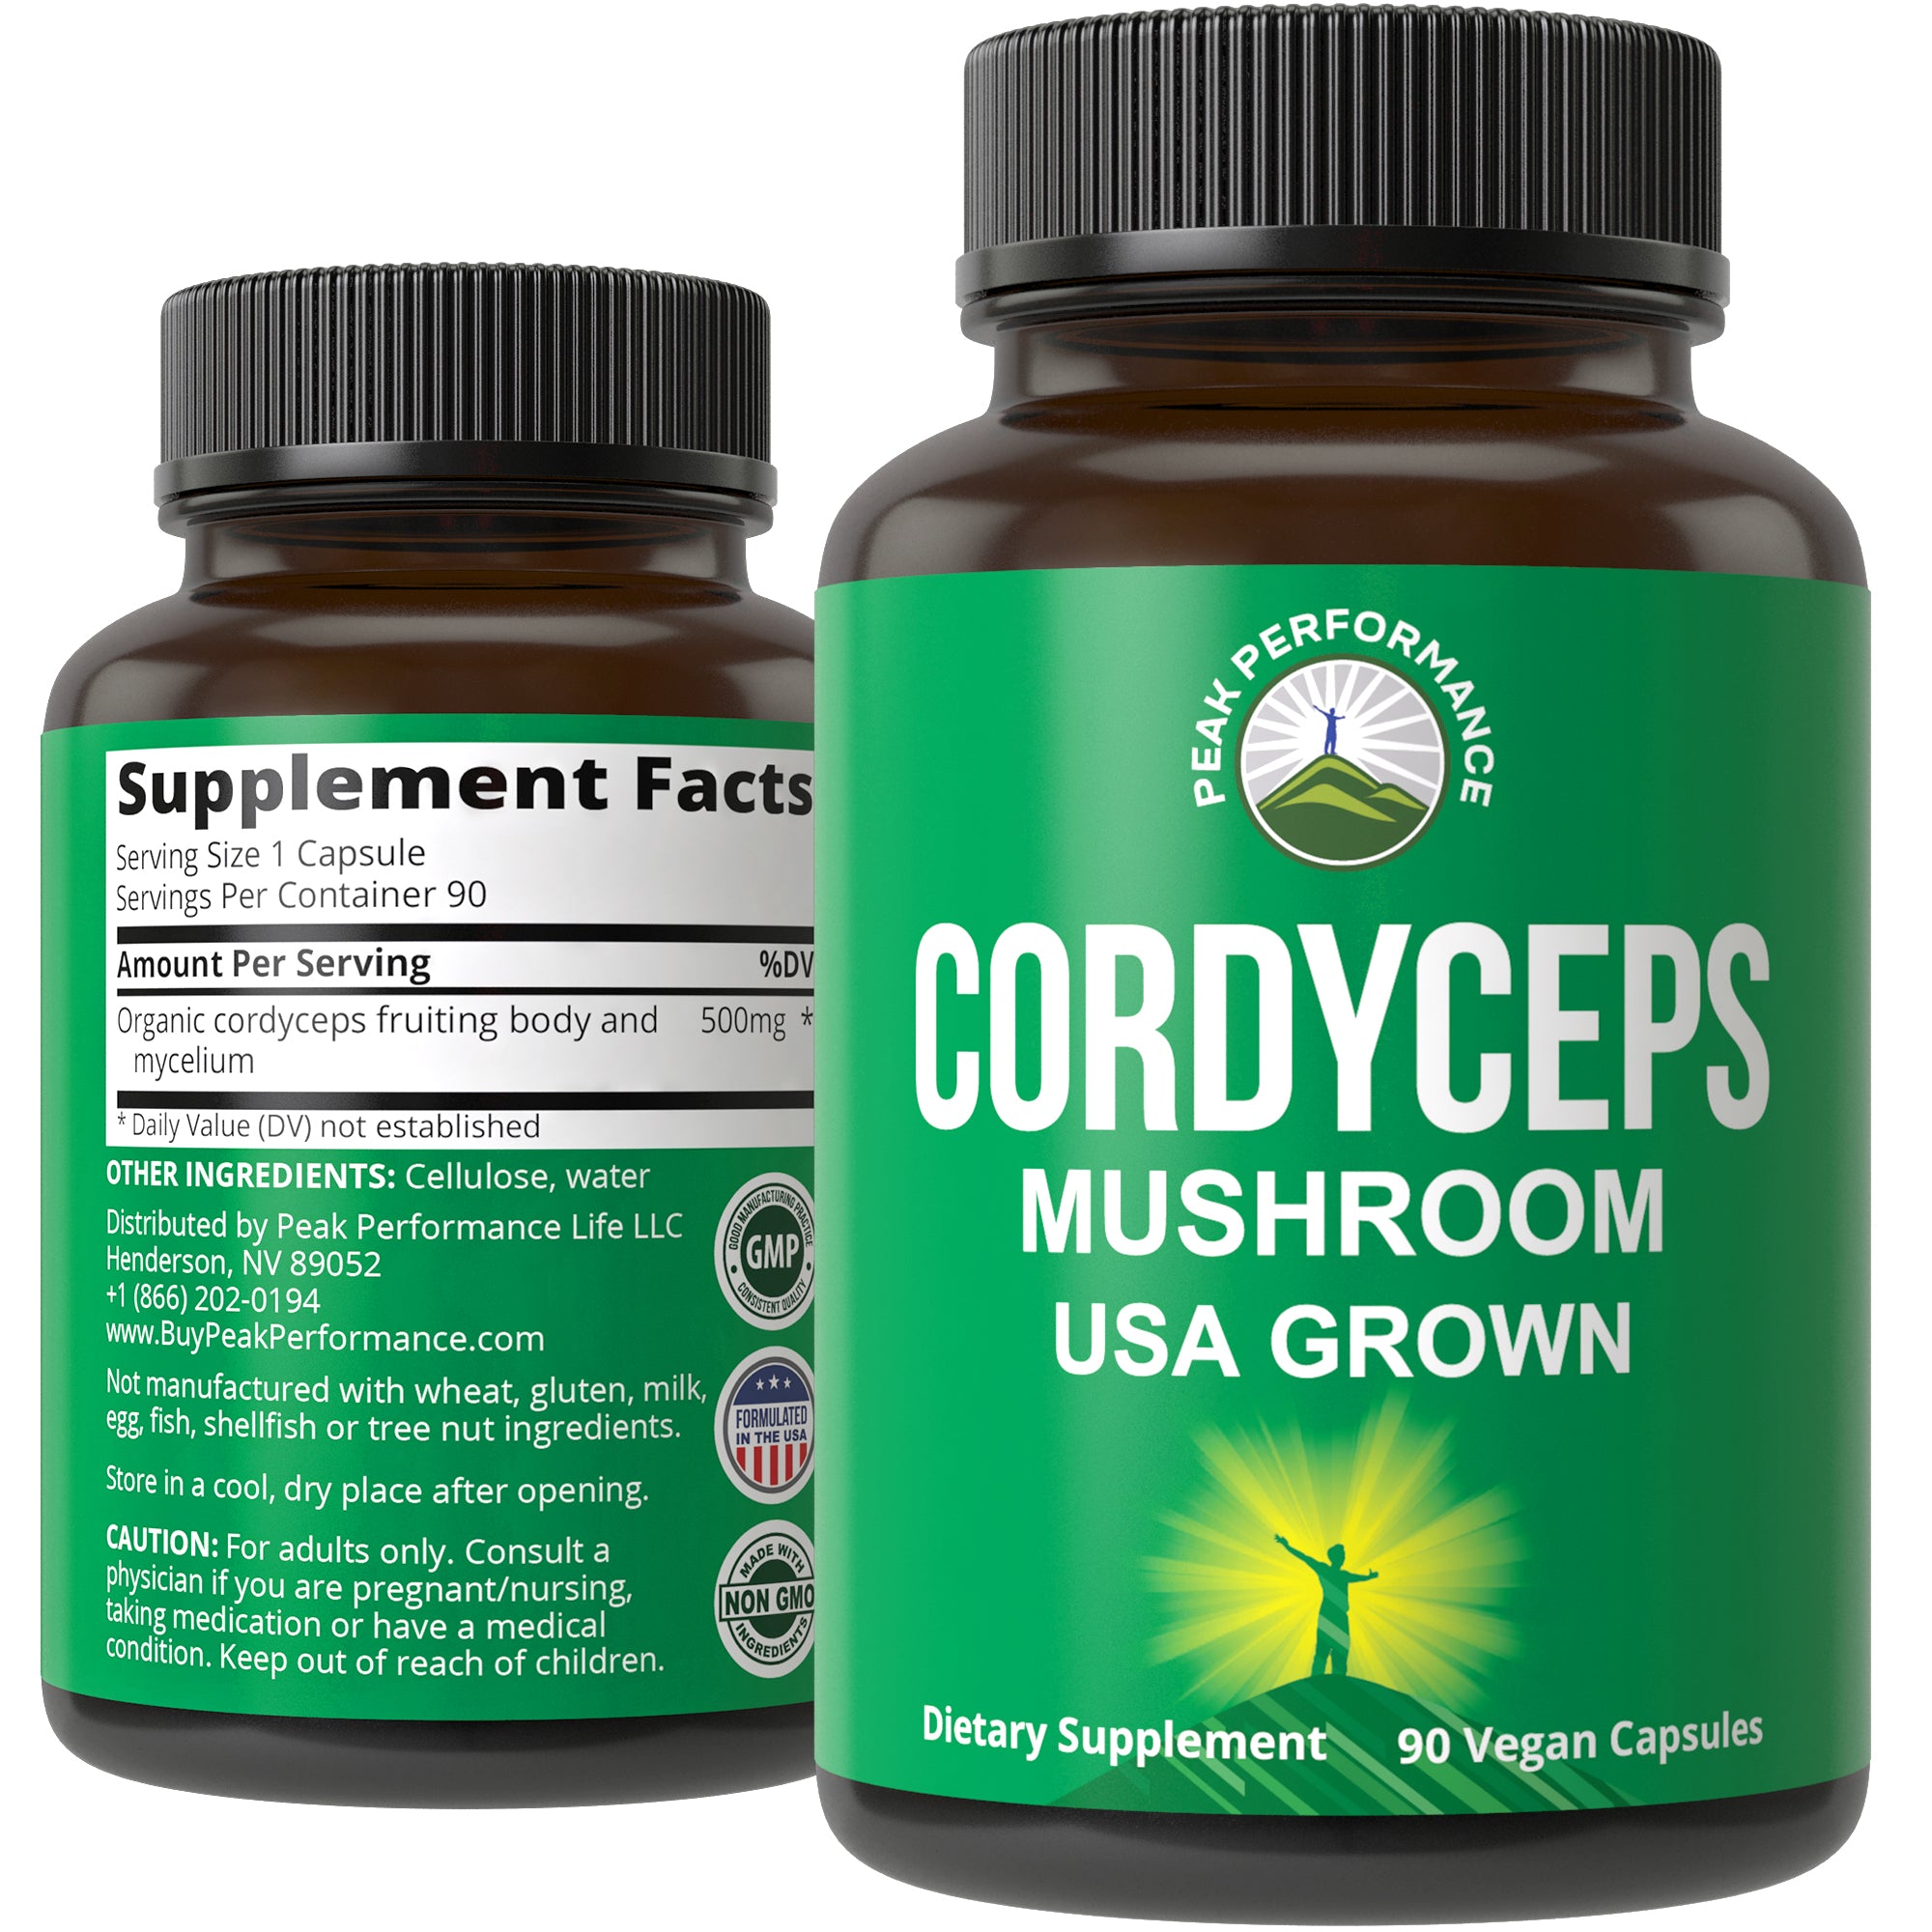 Cordyceps Mushroom Capsules (USA Grown)